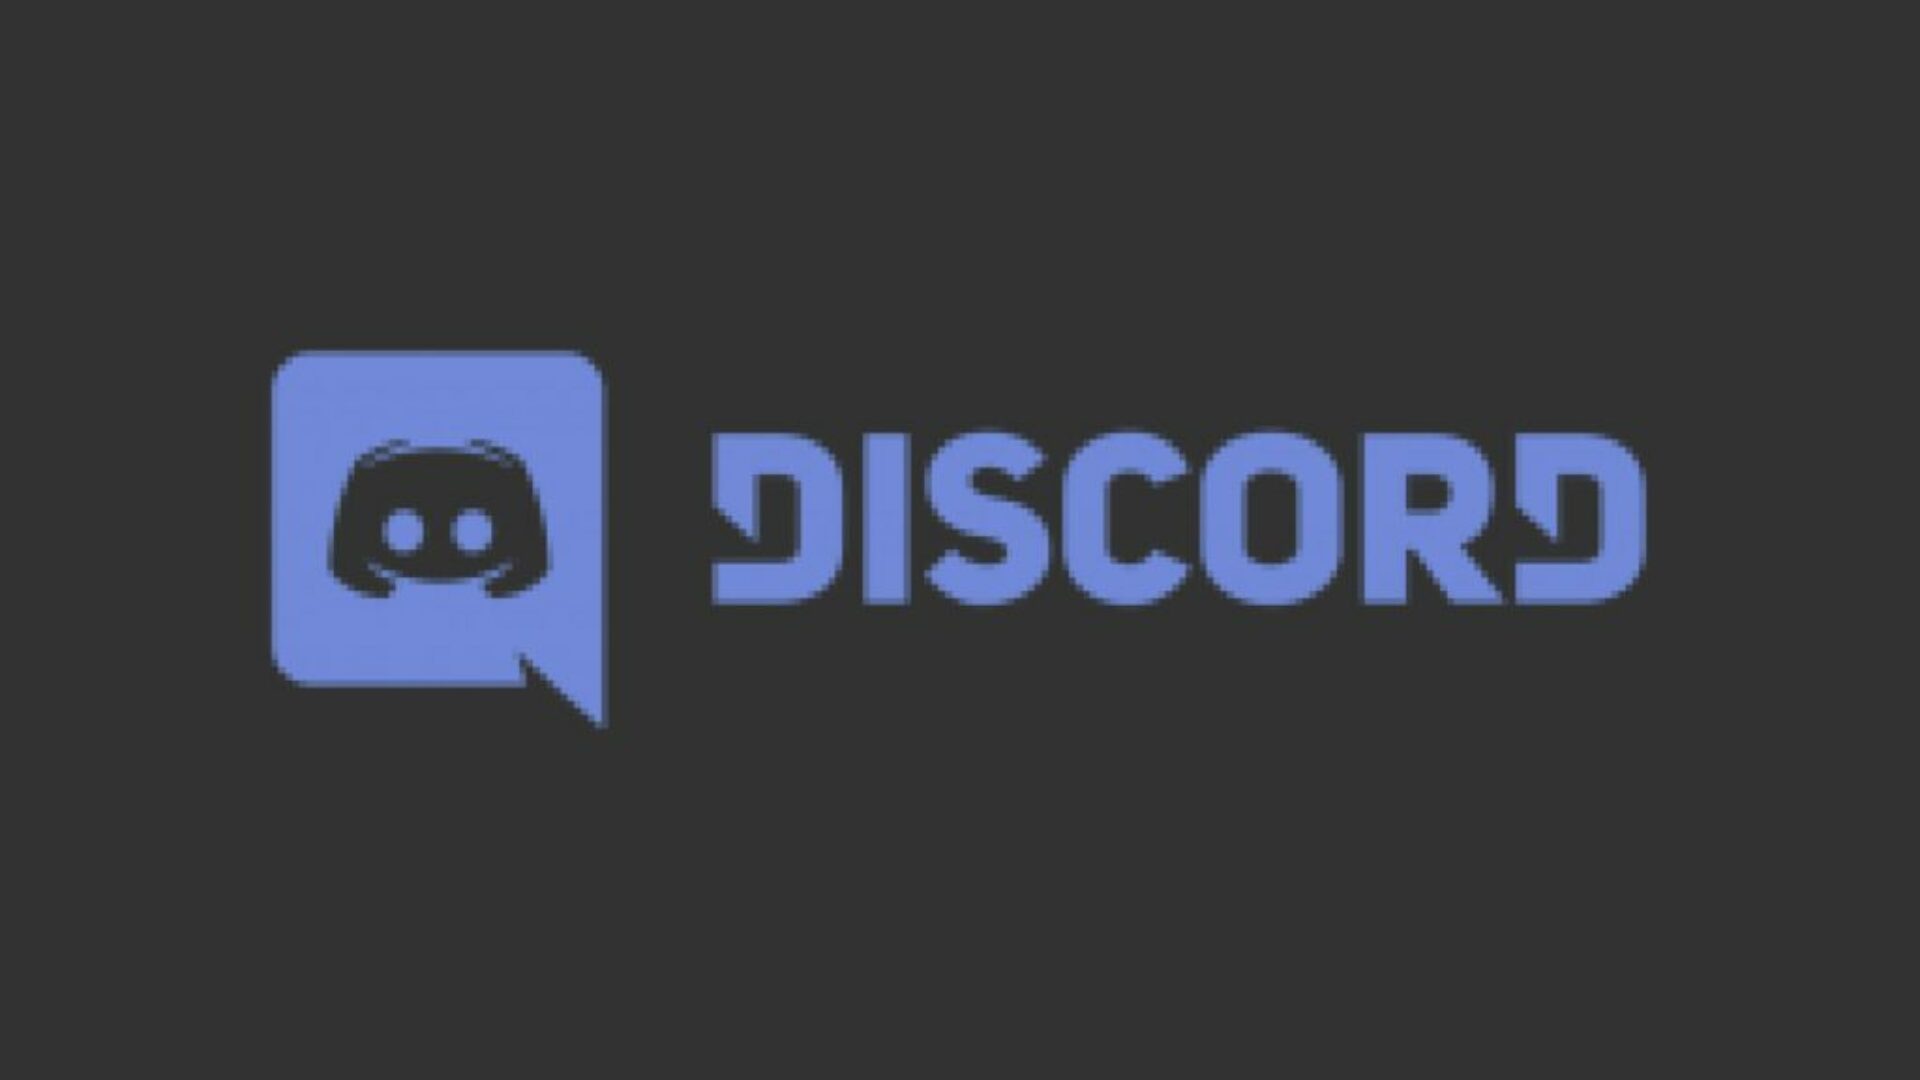 sponsor logo_discord